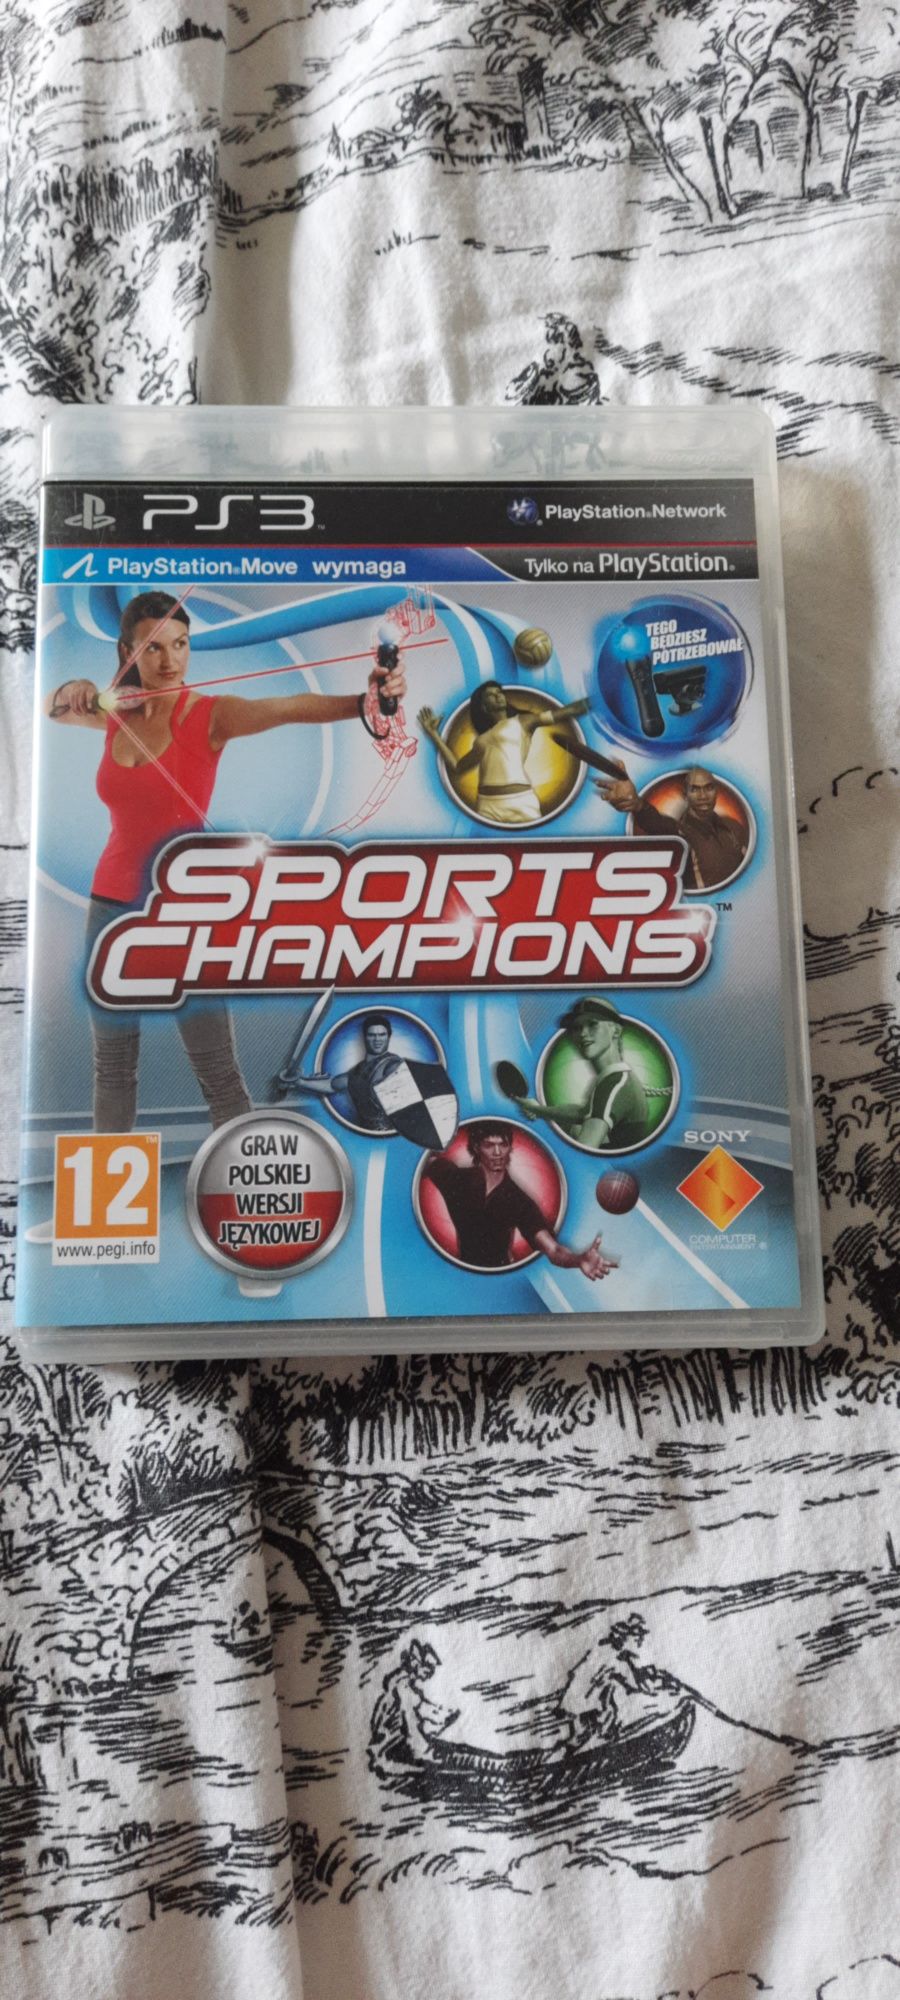 PS3 sports champions